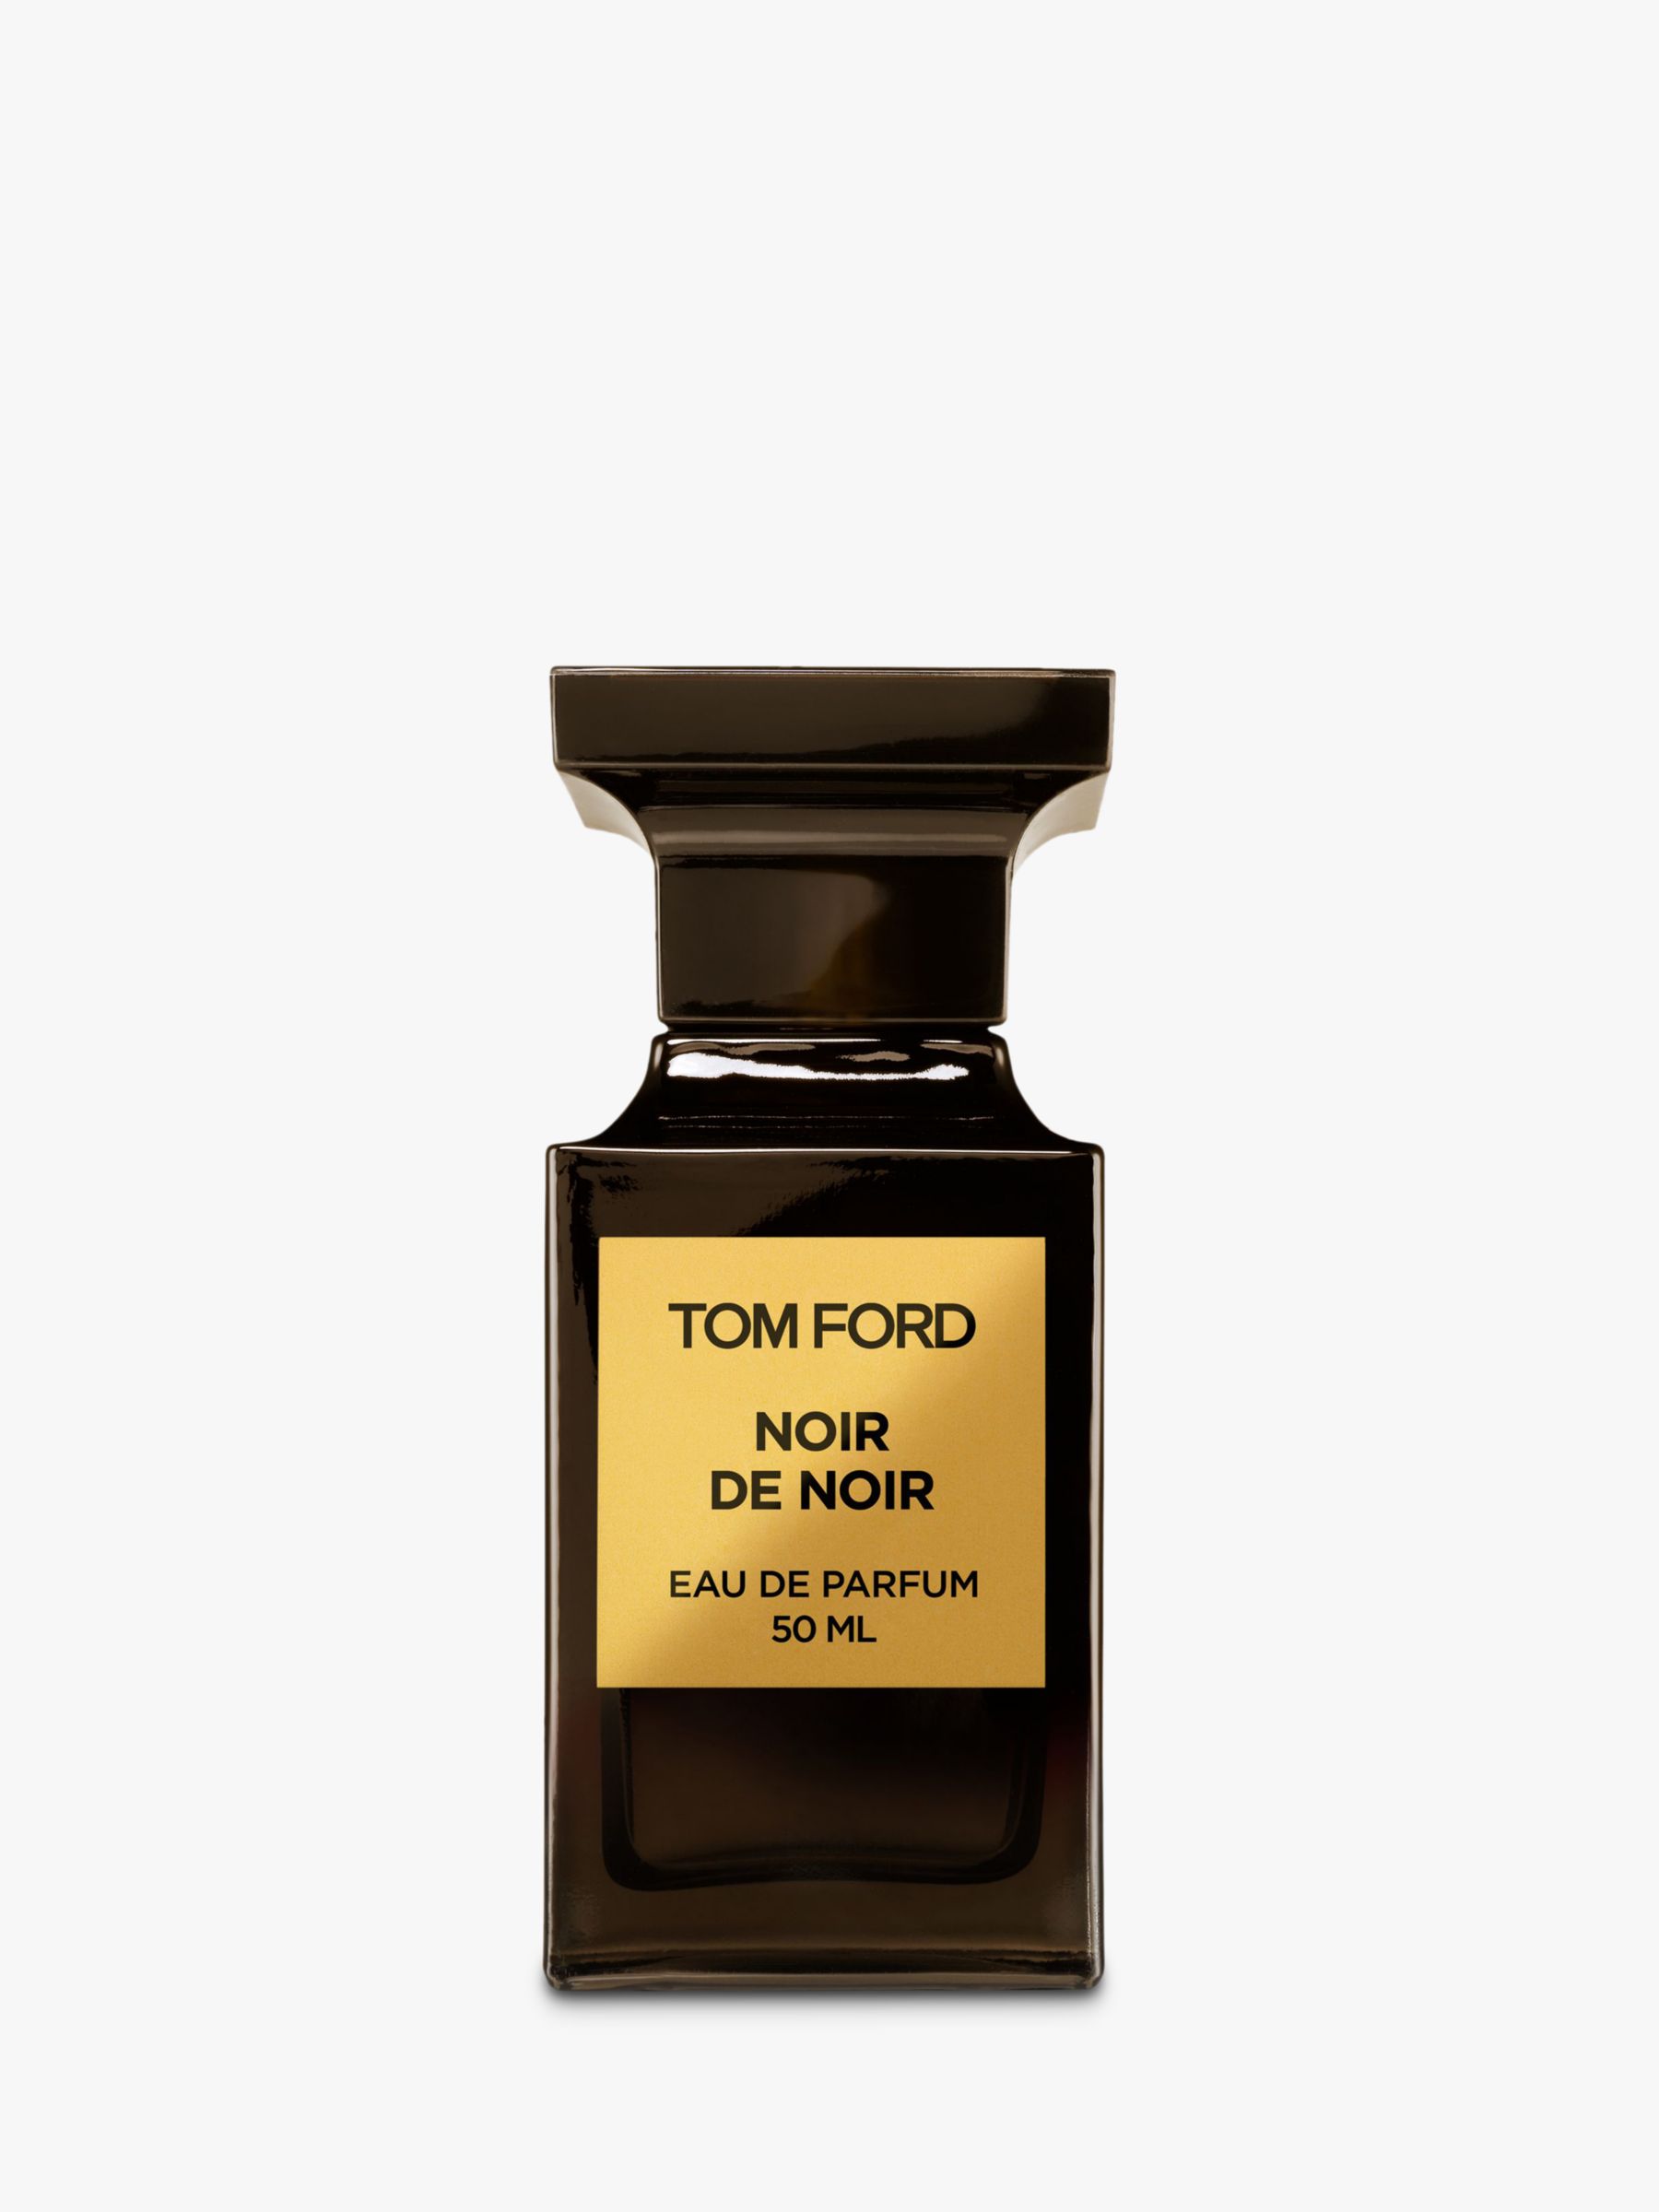 tom ford perfume noir de noir price